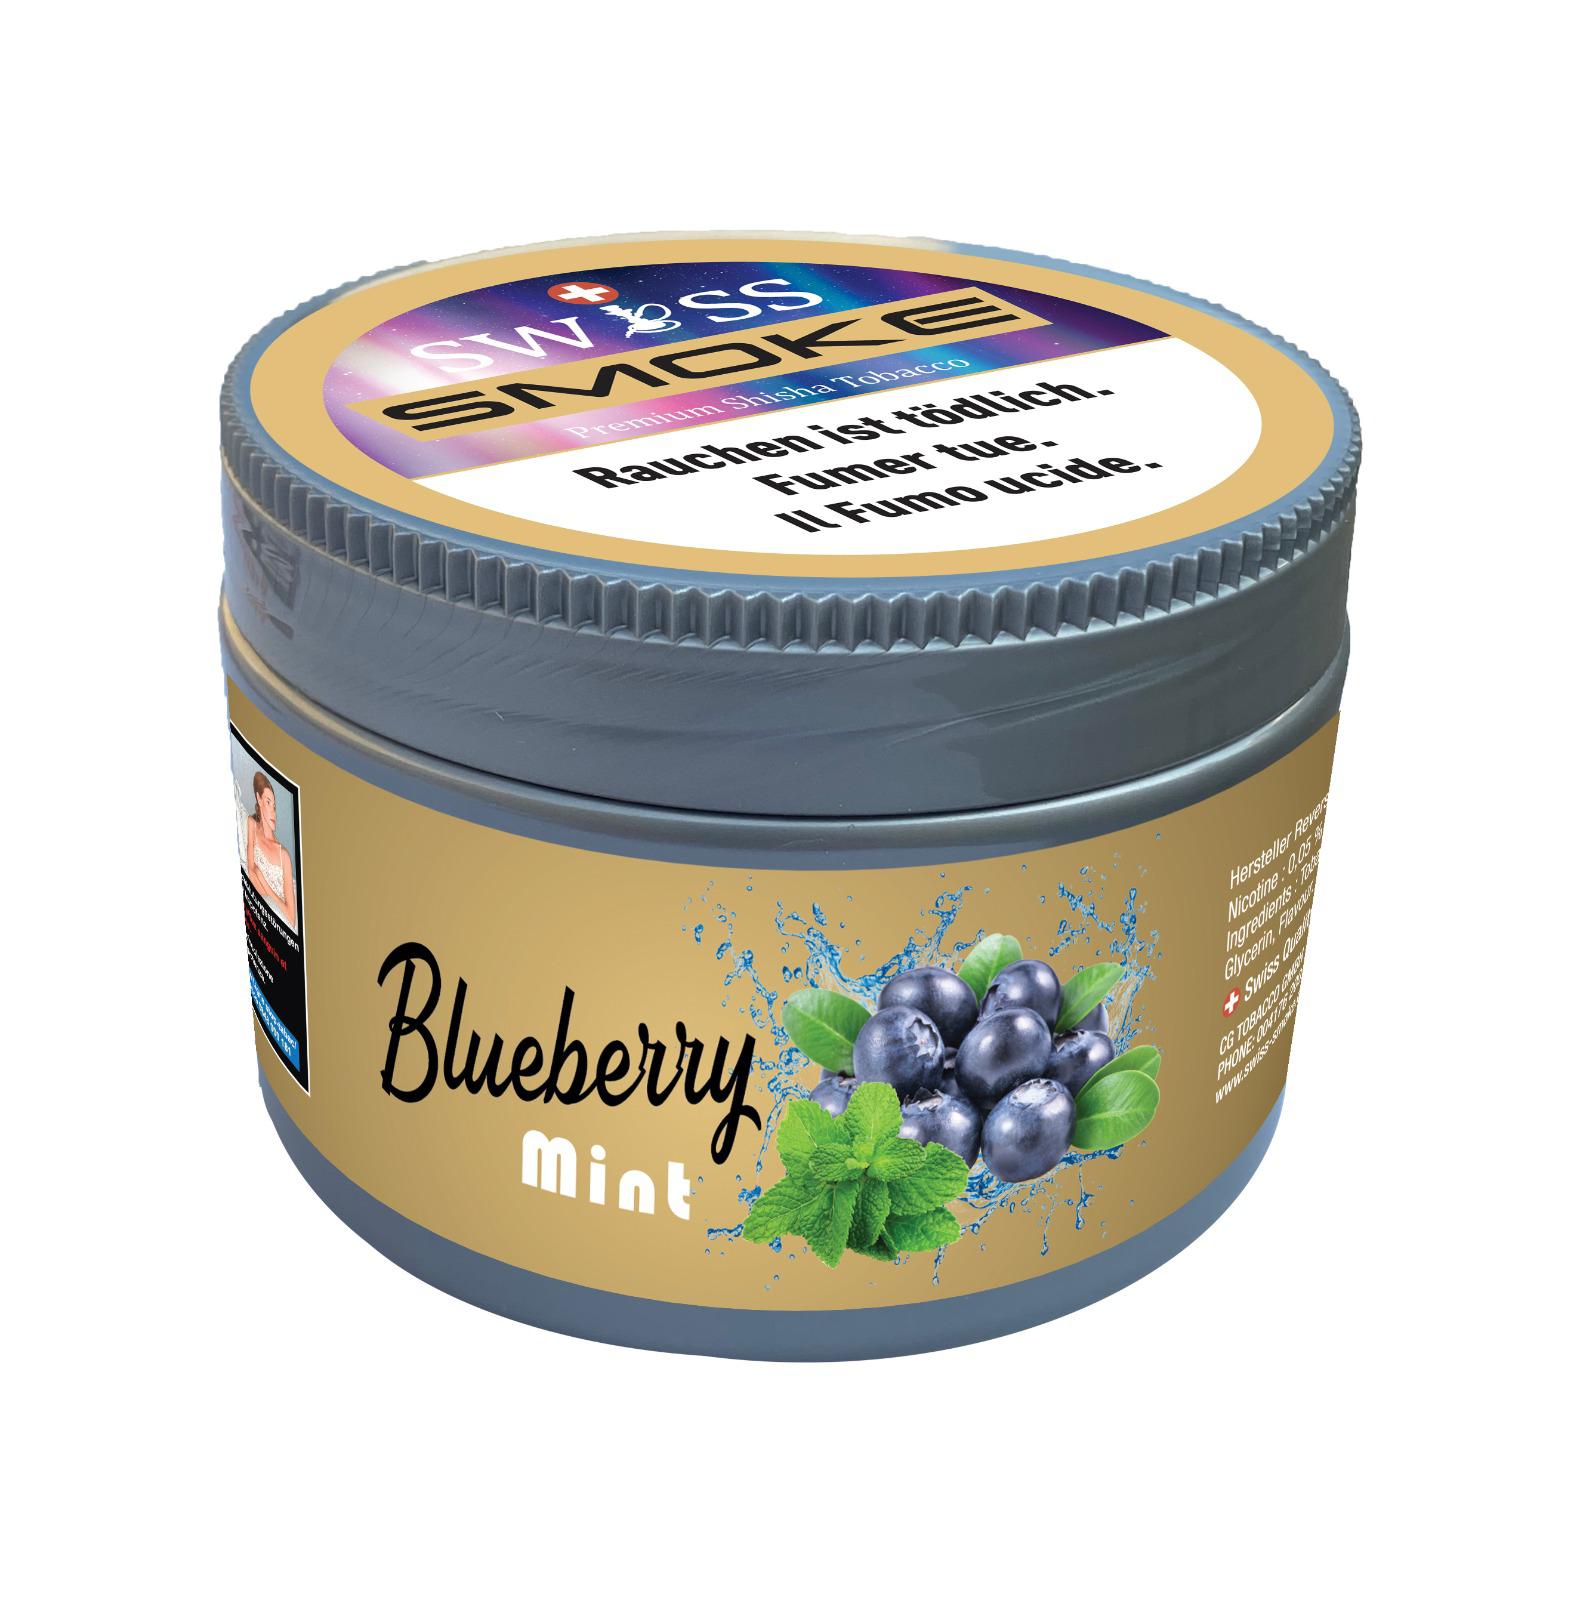 Blueberry Mint 200g